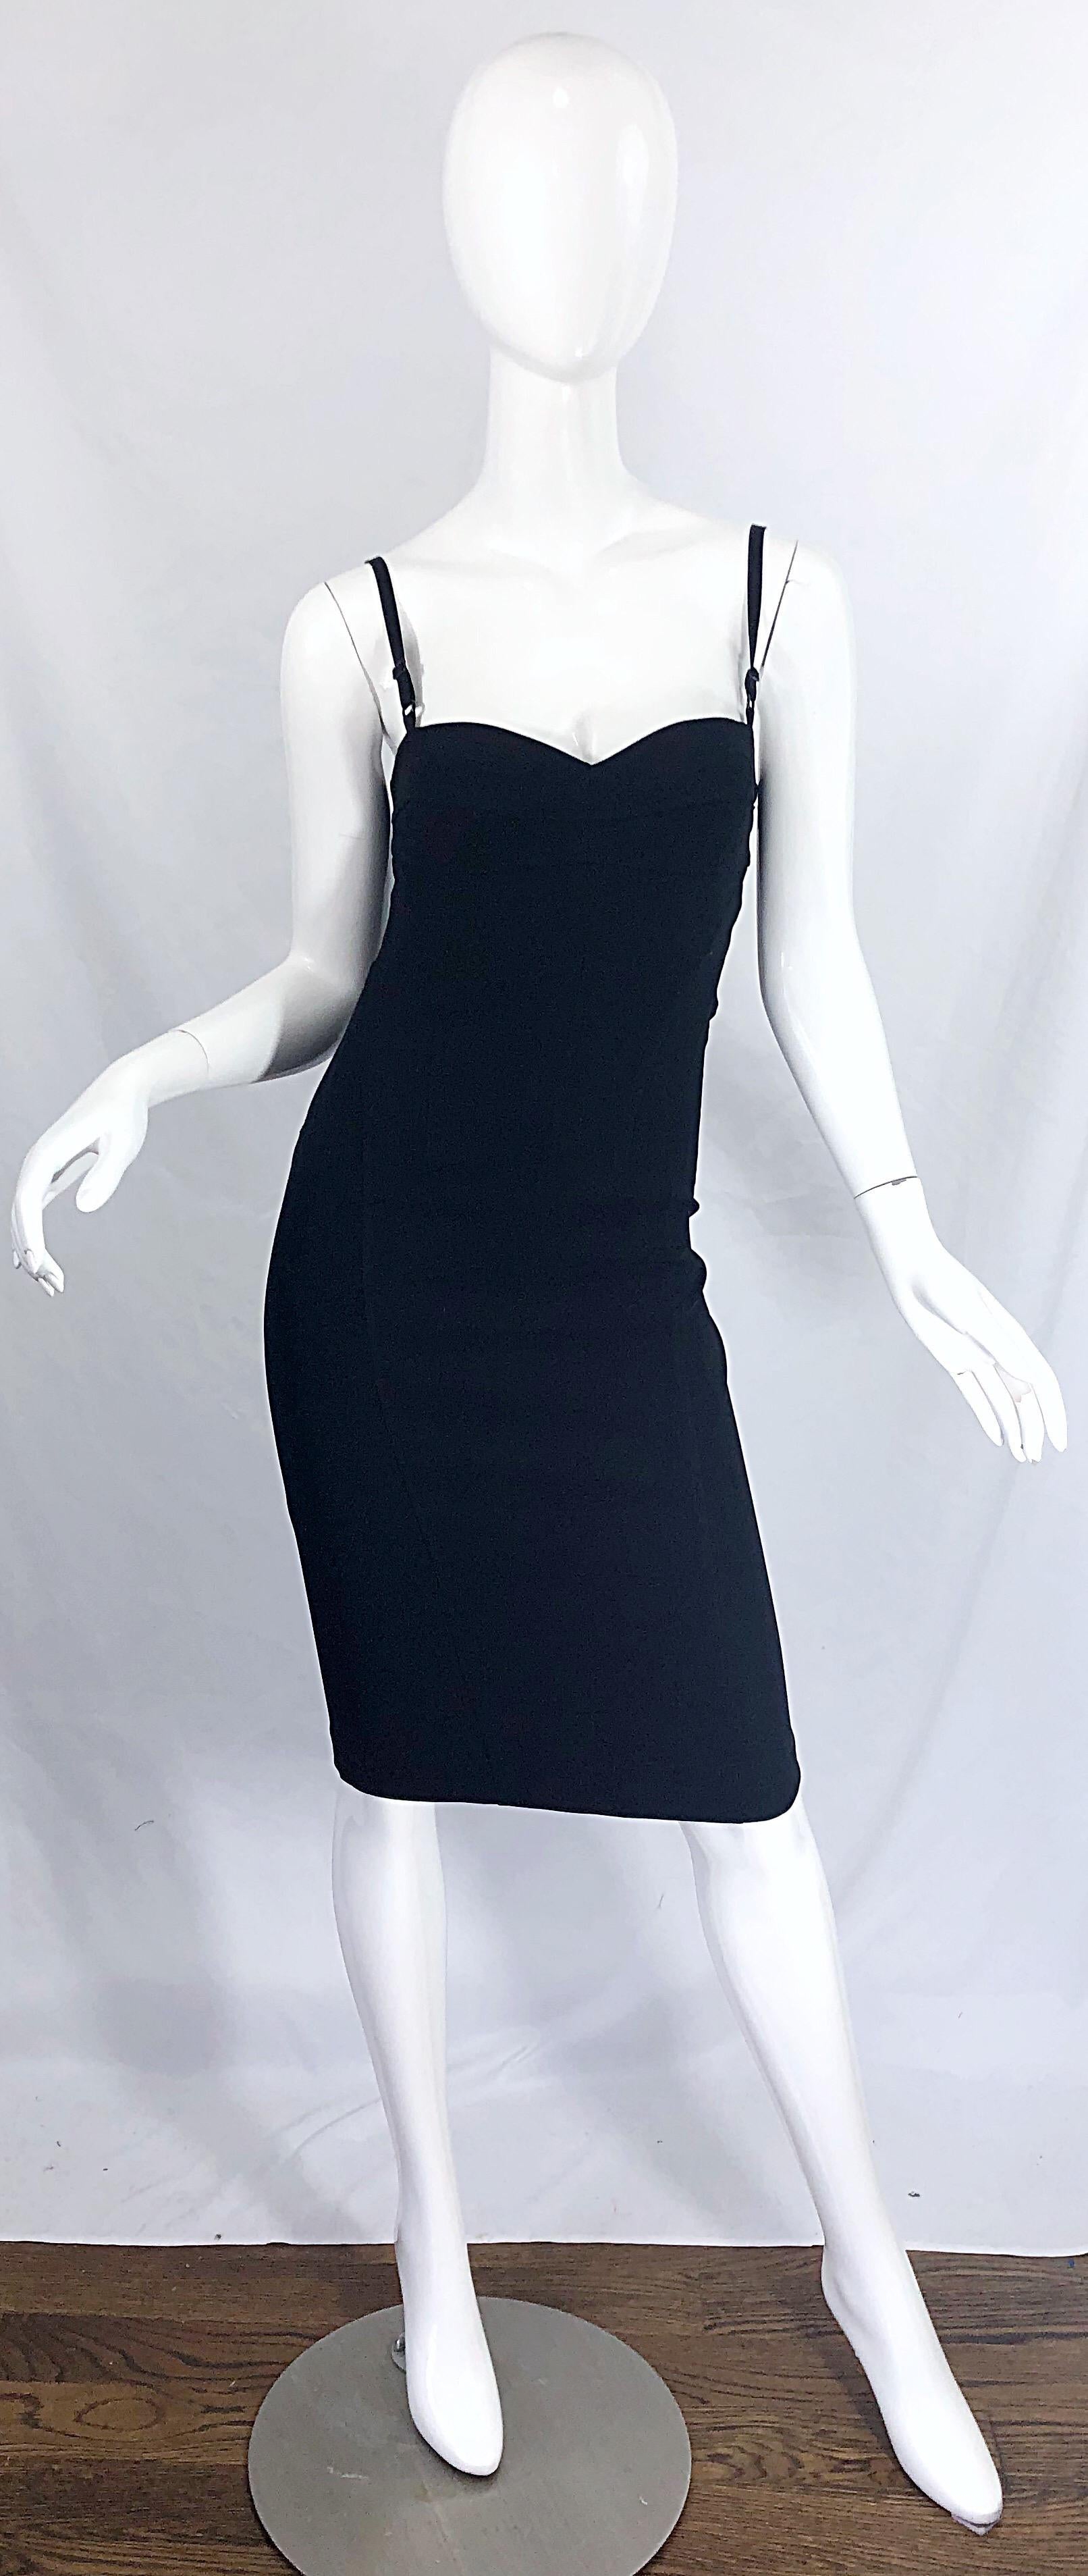 1990s Dolce & Gabbana Black Corset Dress Size 42 US 6 - 8 Vintage 90s Iconic LBD For Sale 7